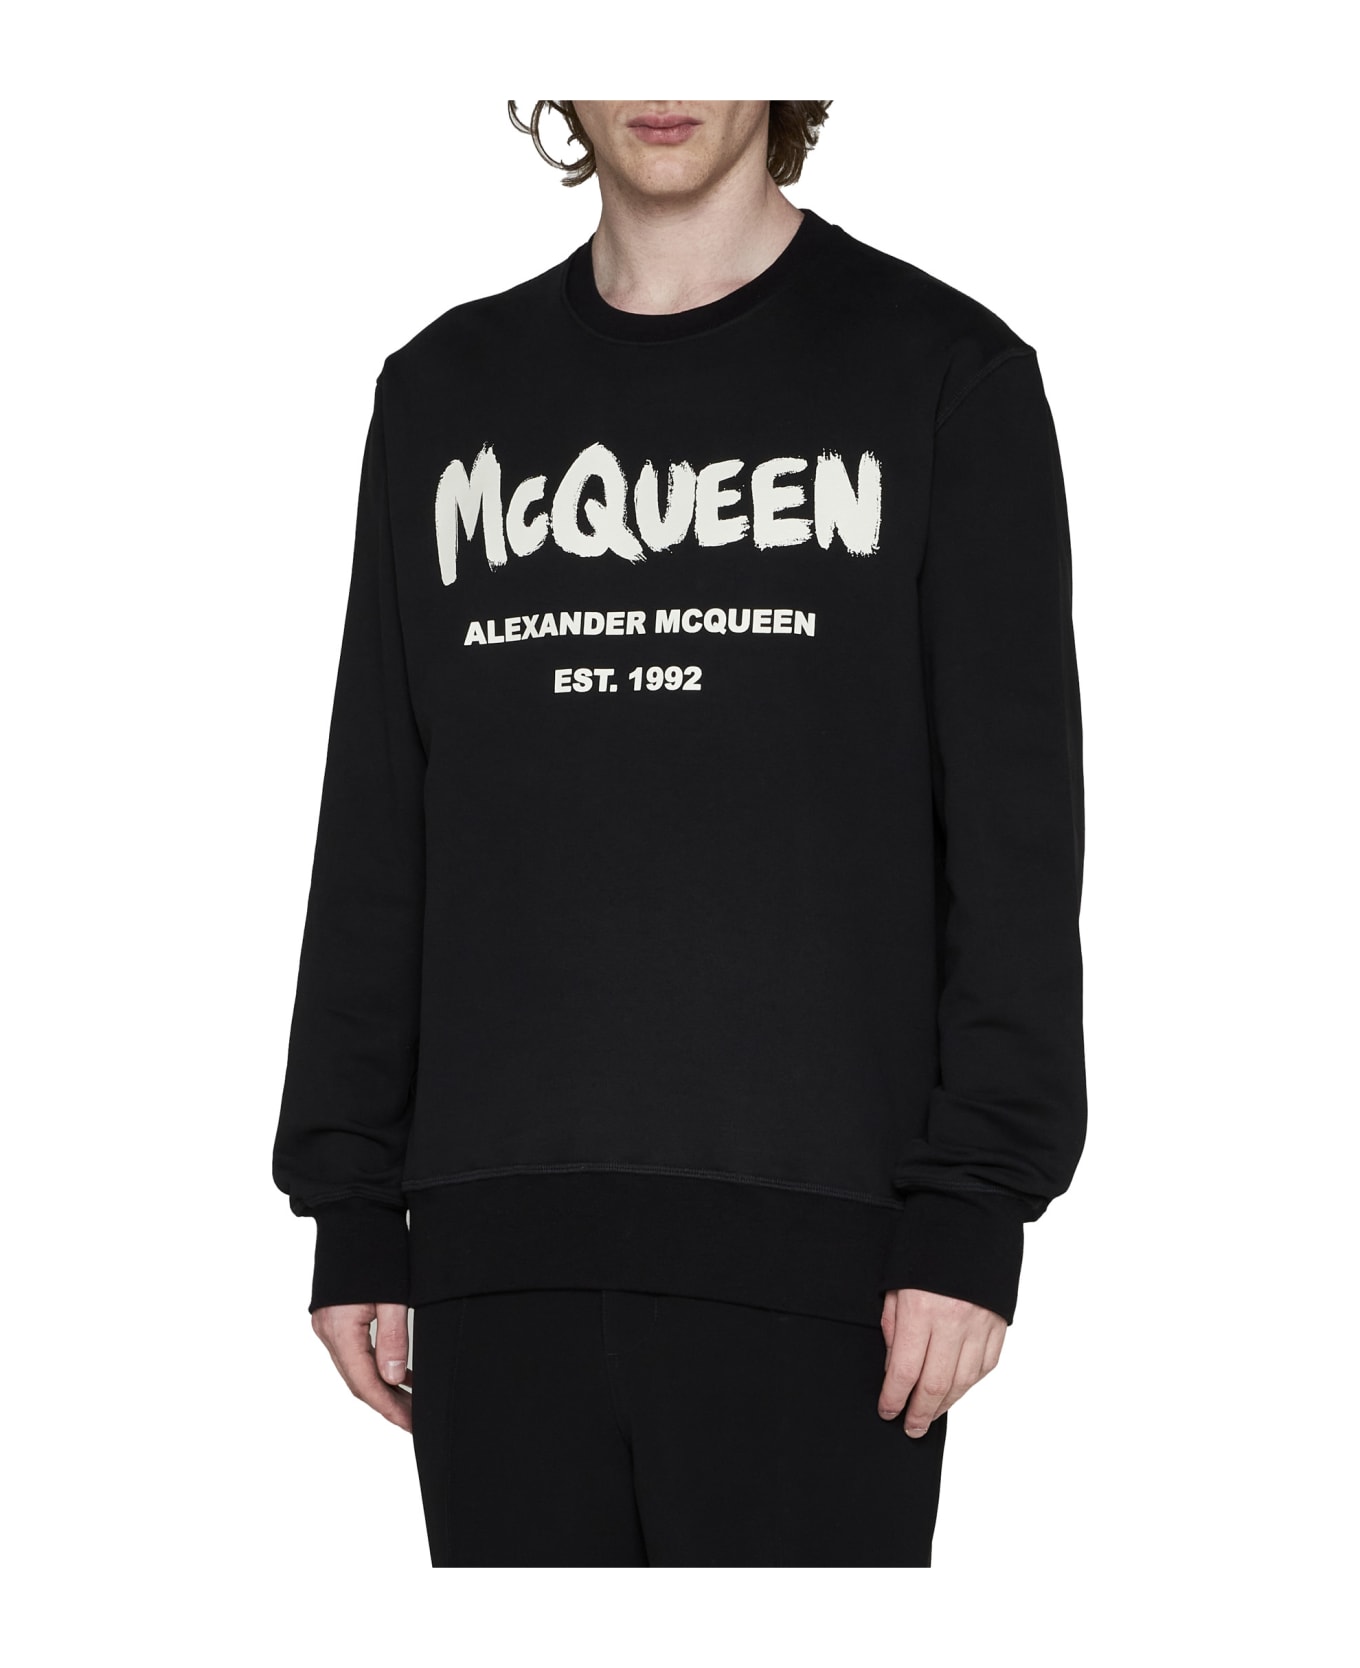 Alexander McQueen Graffiti Print Sweater - Black